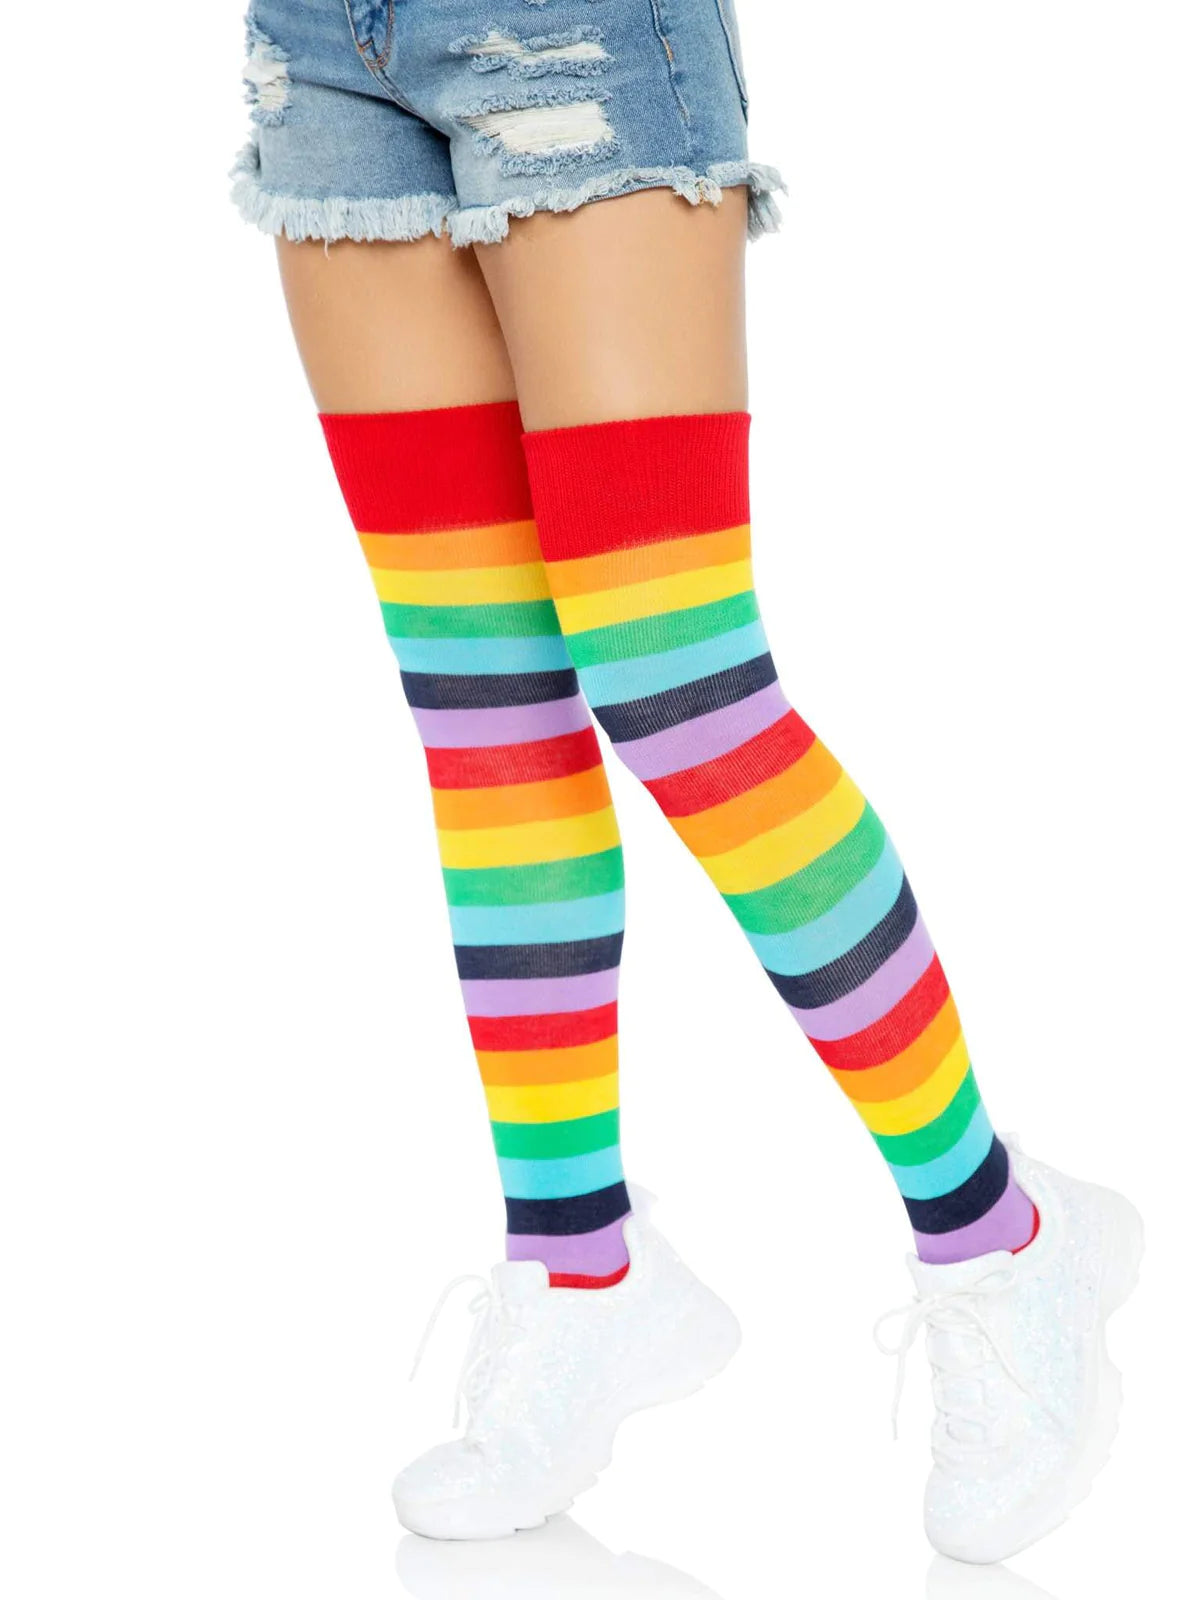 Spandex Rainbow Striped Thigh Highs